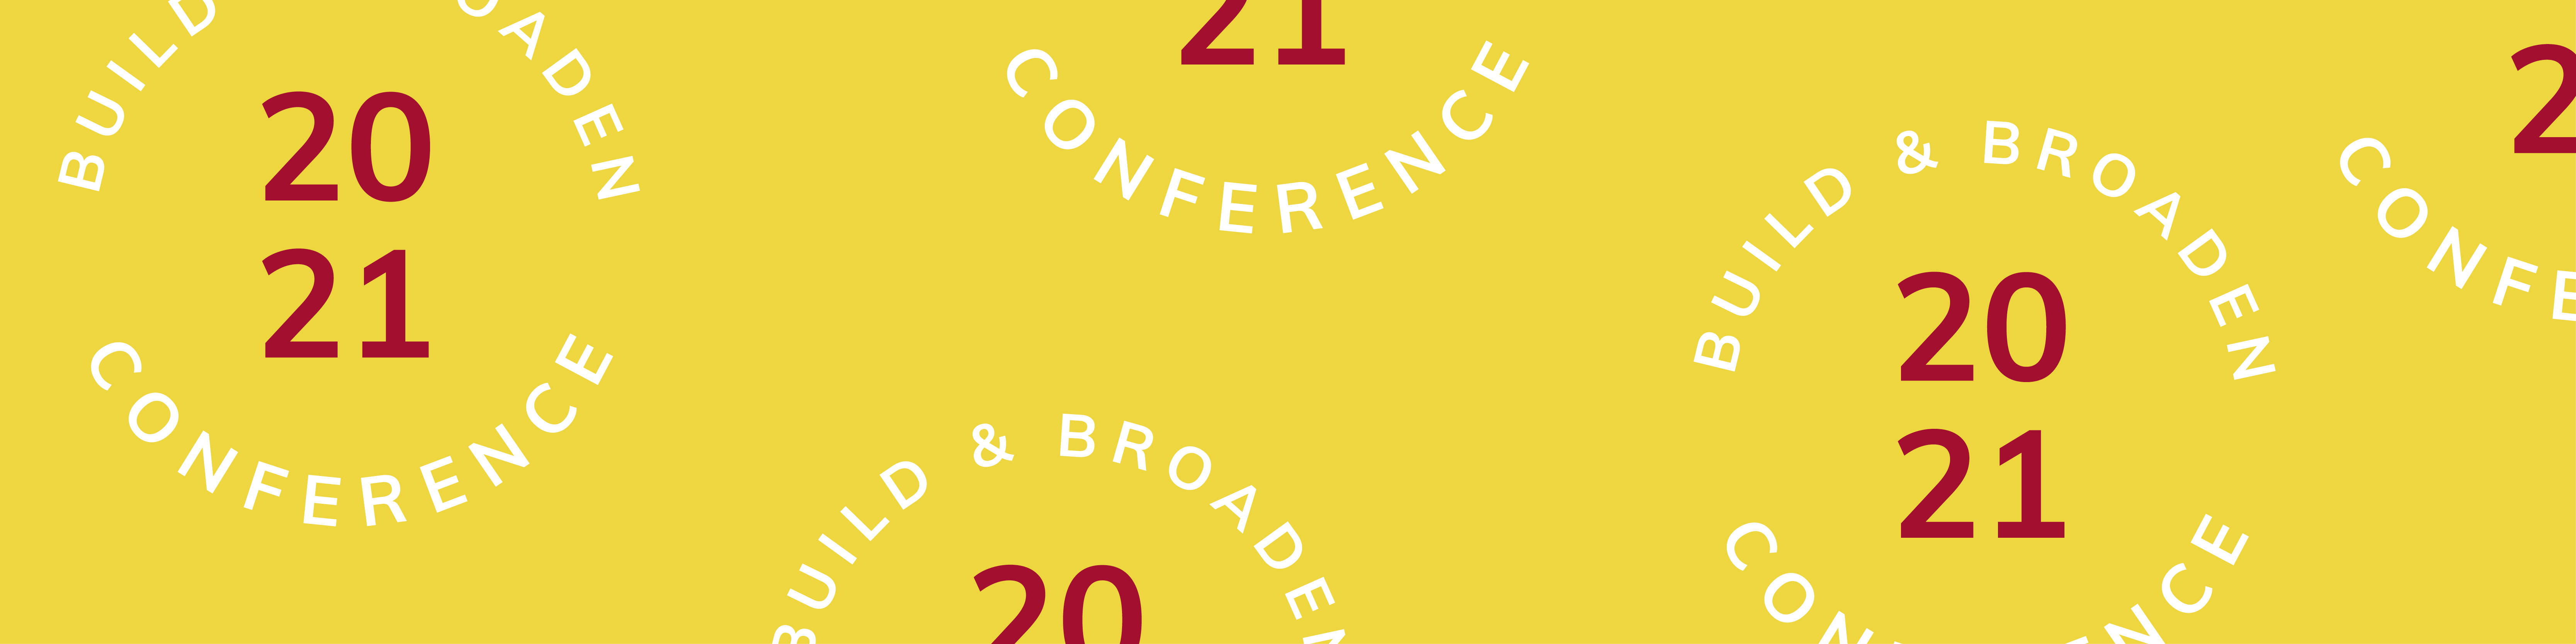 Build and Broaden Conference Header Image